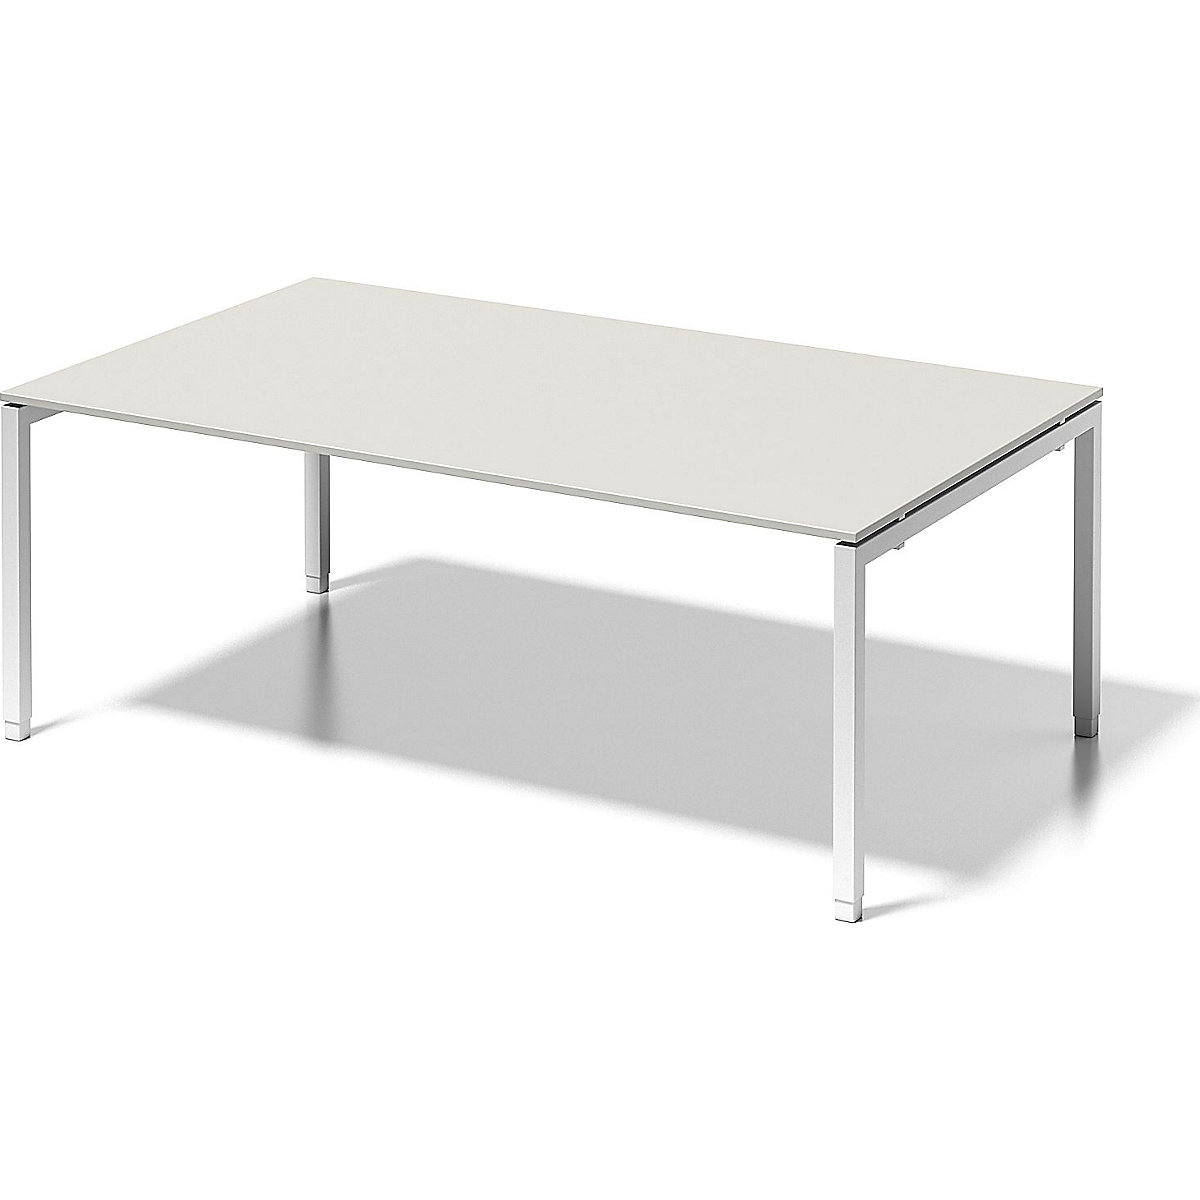 CITO desk, U-frame – BISLEY, HxWxD 650 – 850 x 2000 x 1200 mm, white frame, grey white tabletop-4